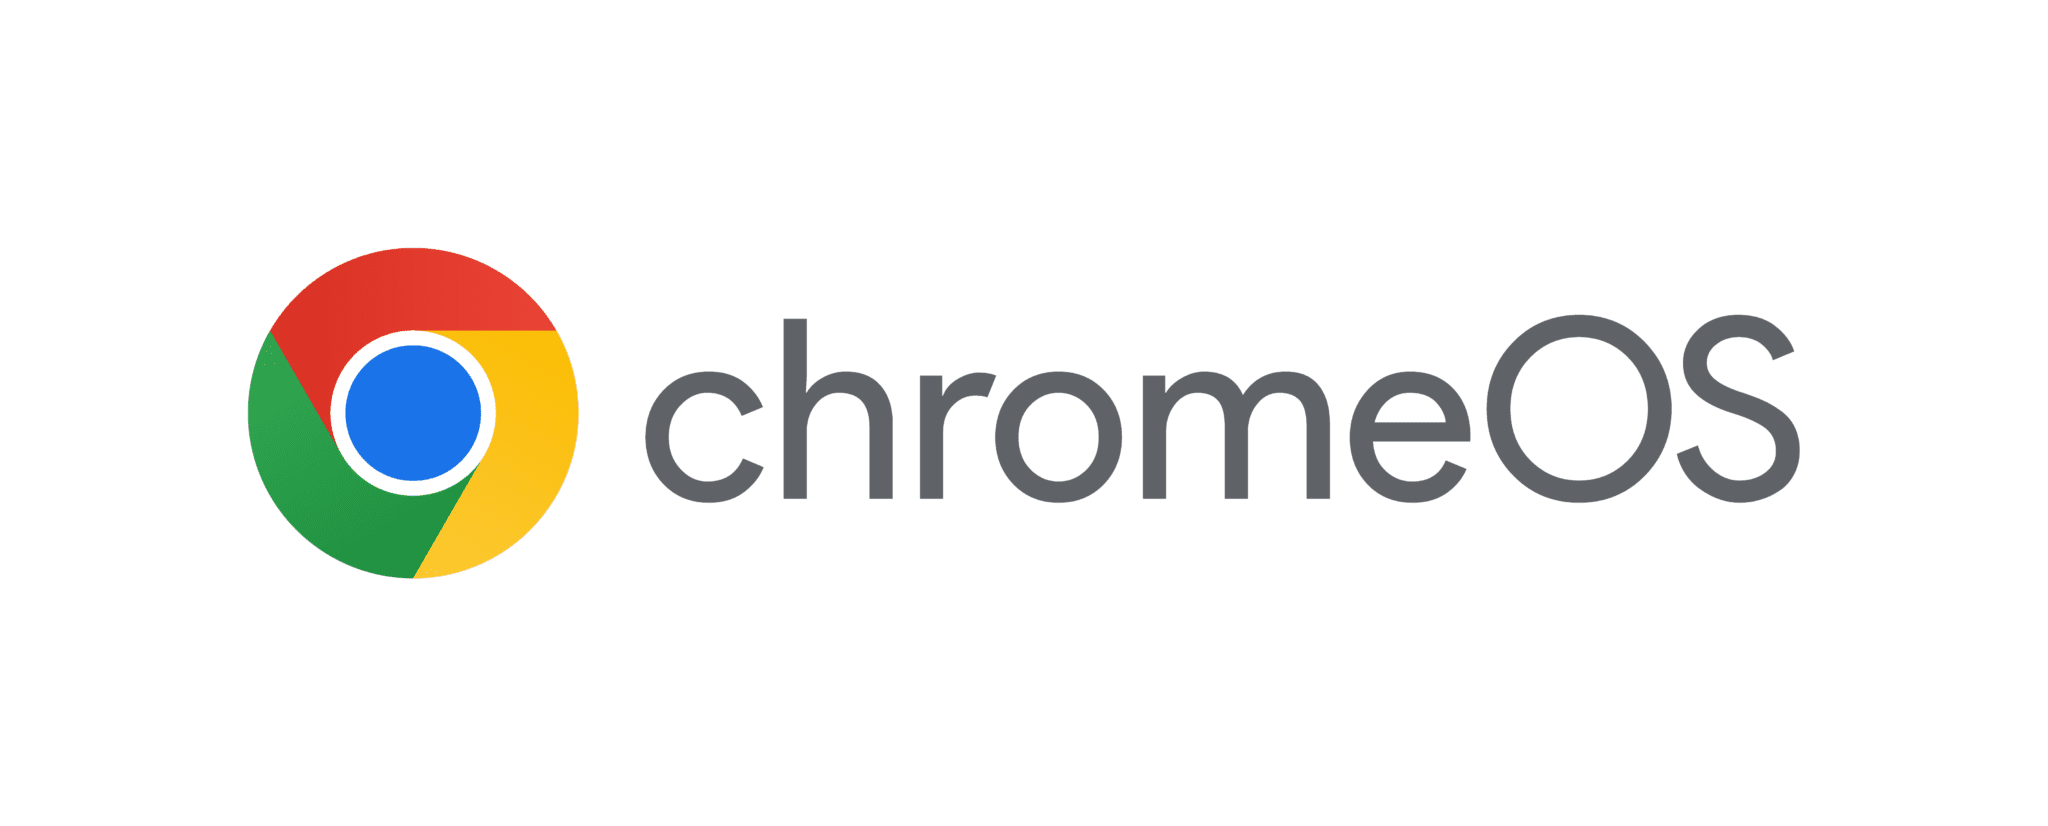 Google ChromeOS Horizontal Full Colour RGB w Transparent background